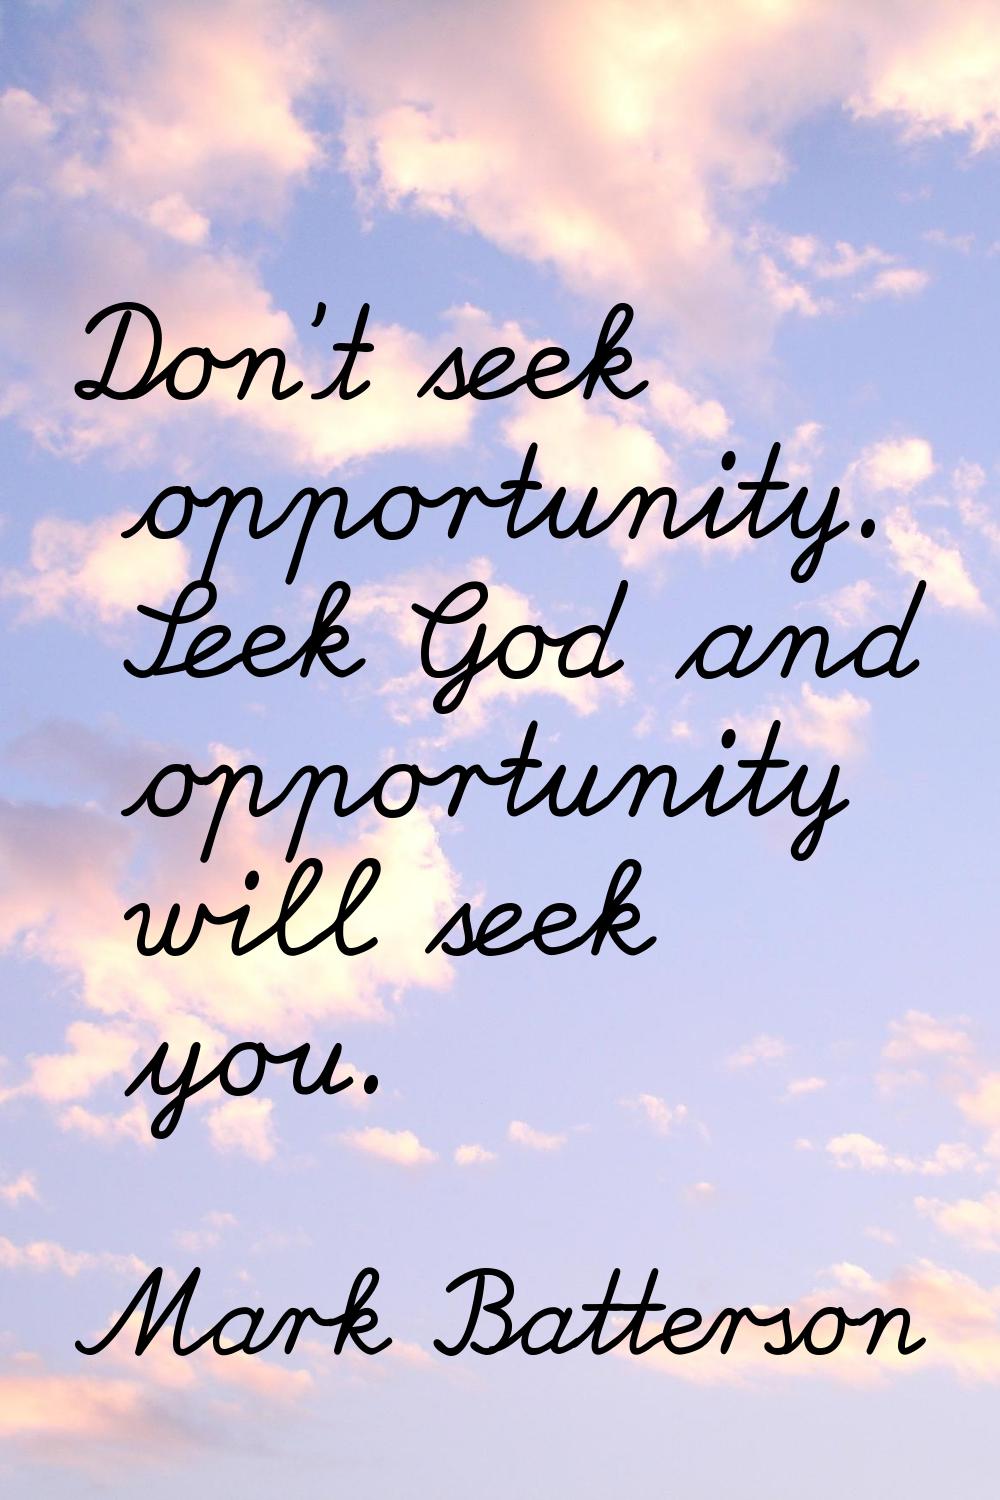 Don't seek opportunity. Seek God and opportunity will seek you.